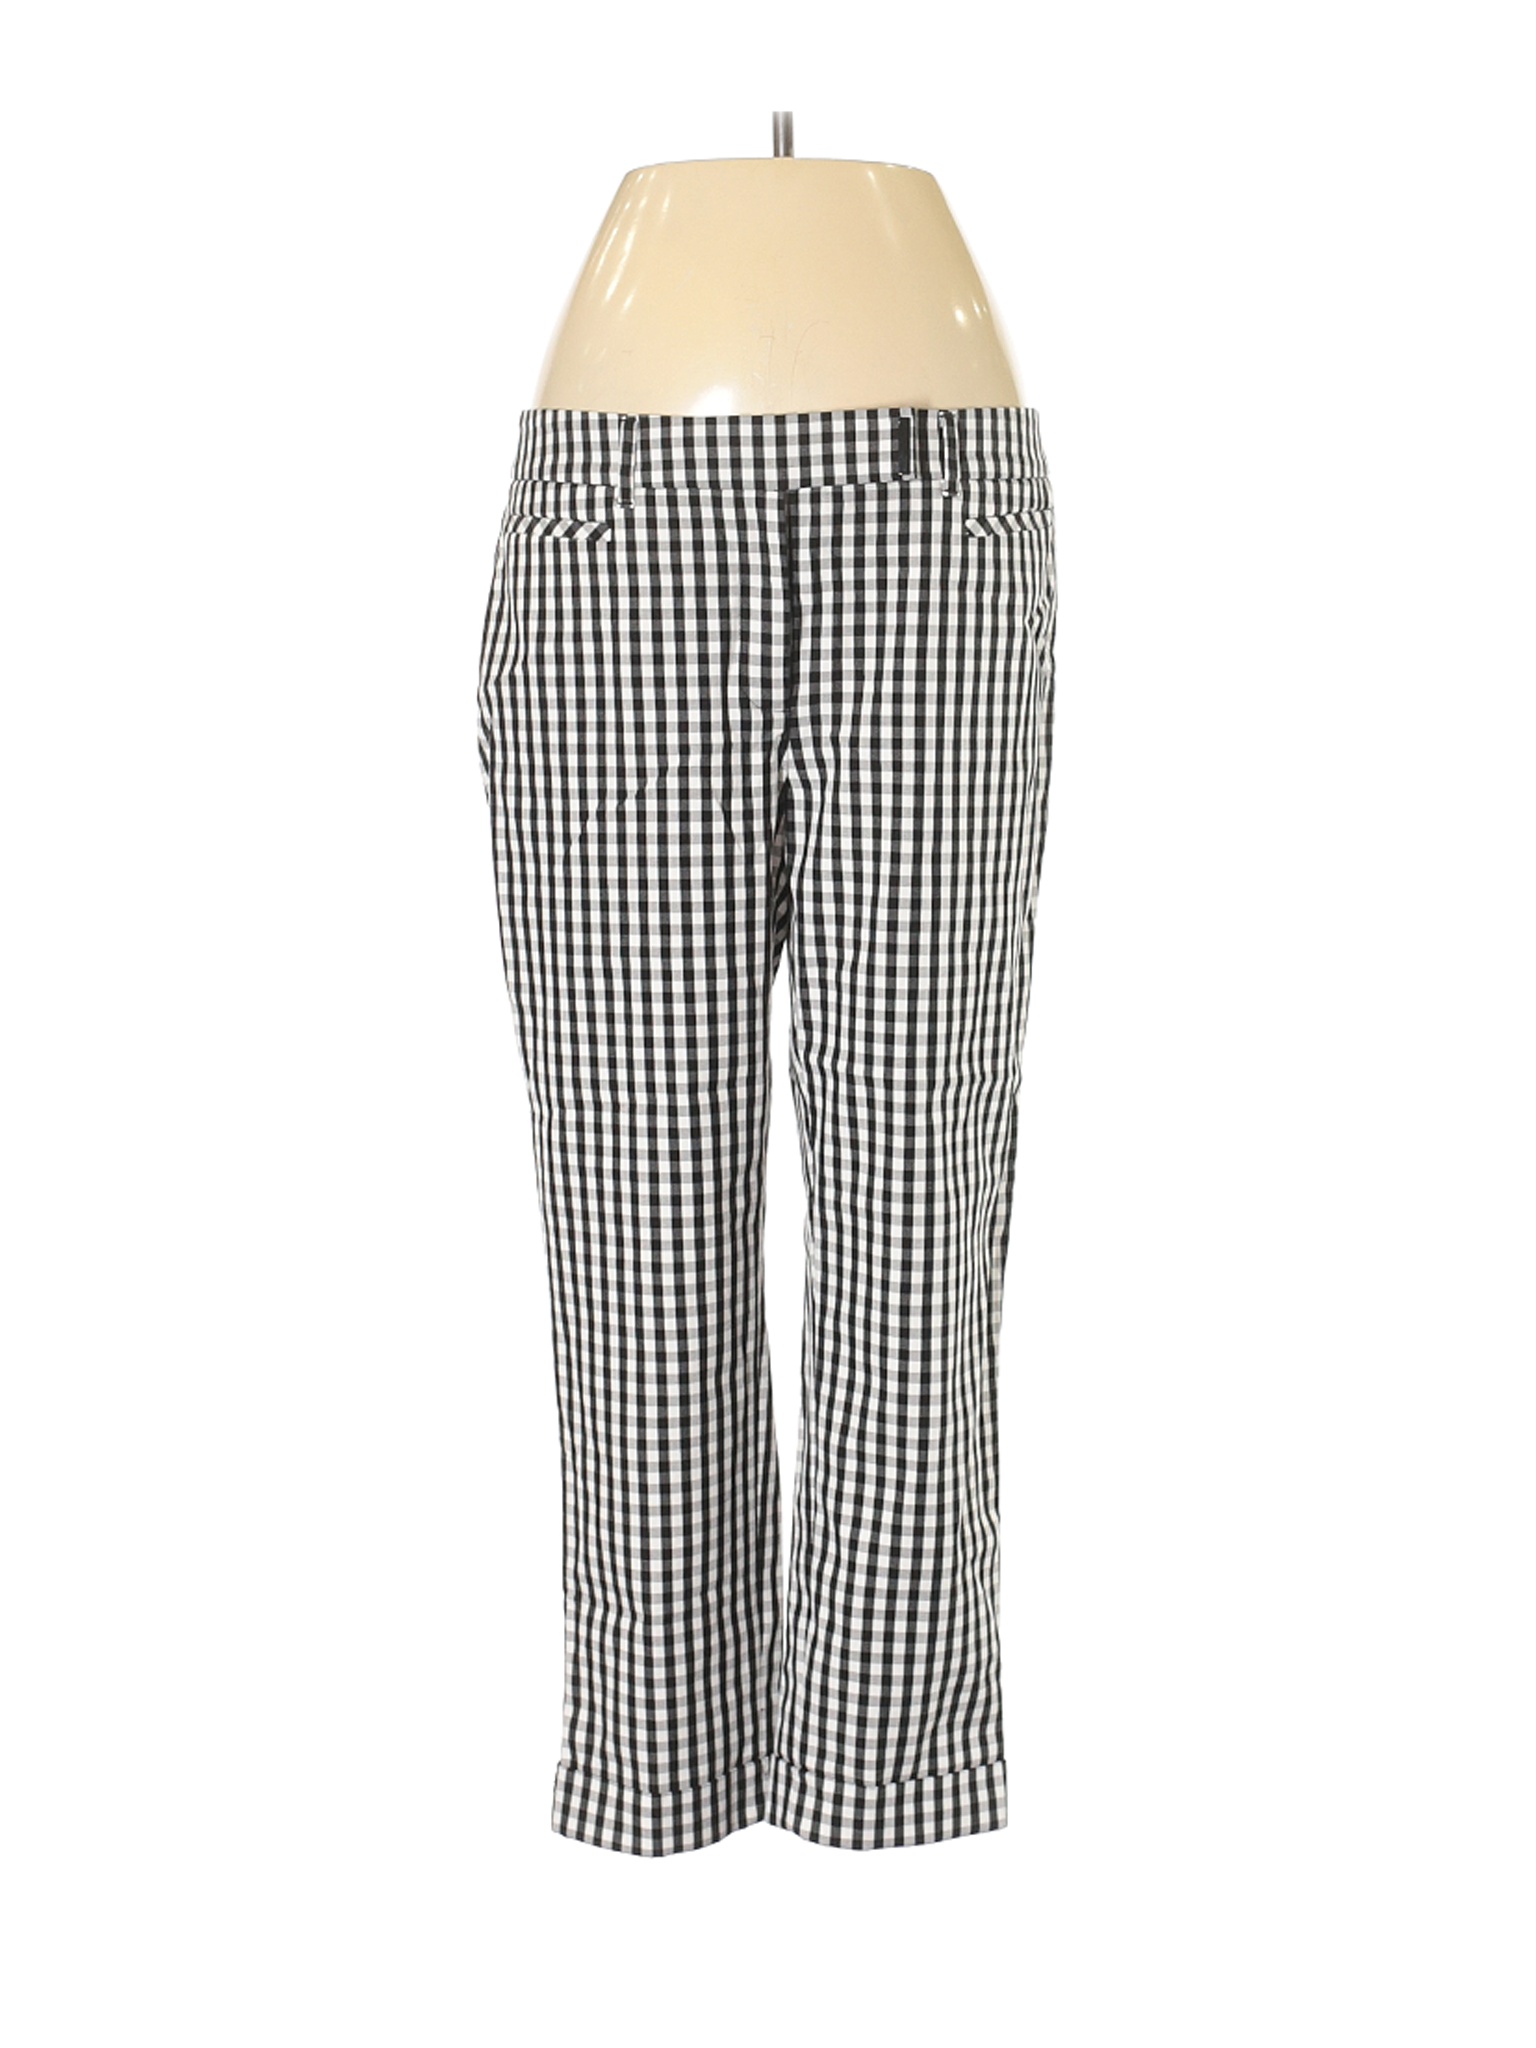 White House Black Market Women Gray Casual Pants 4 | eBay